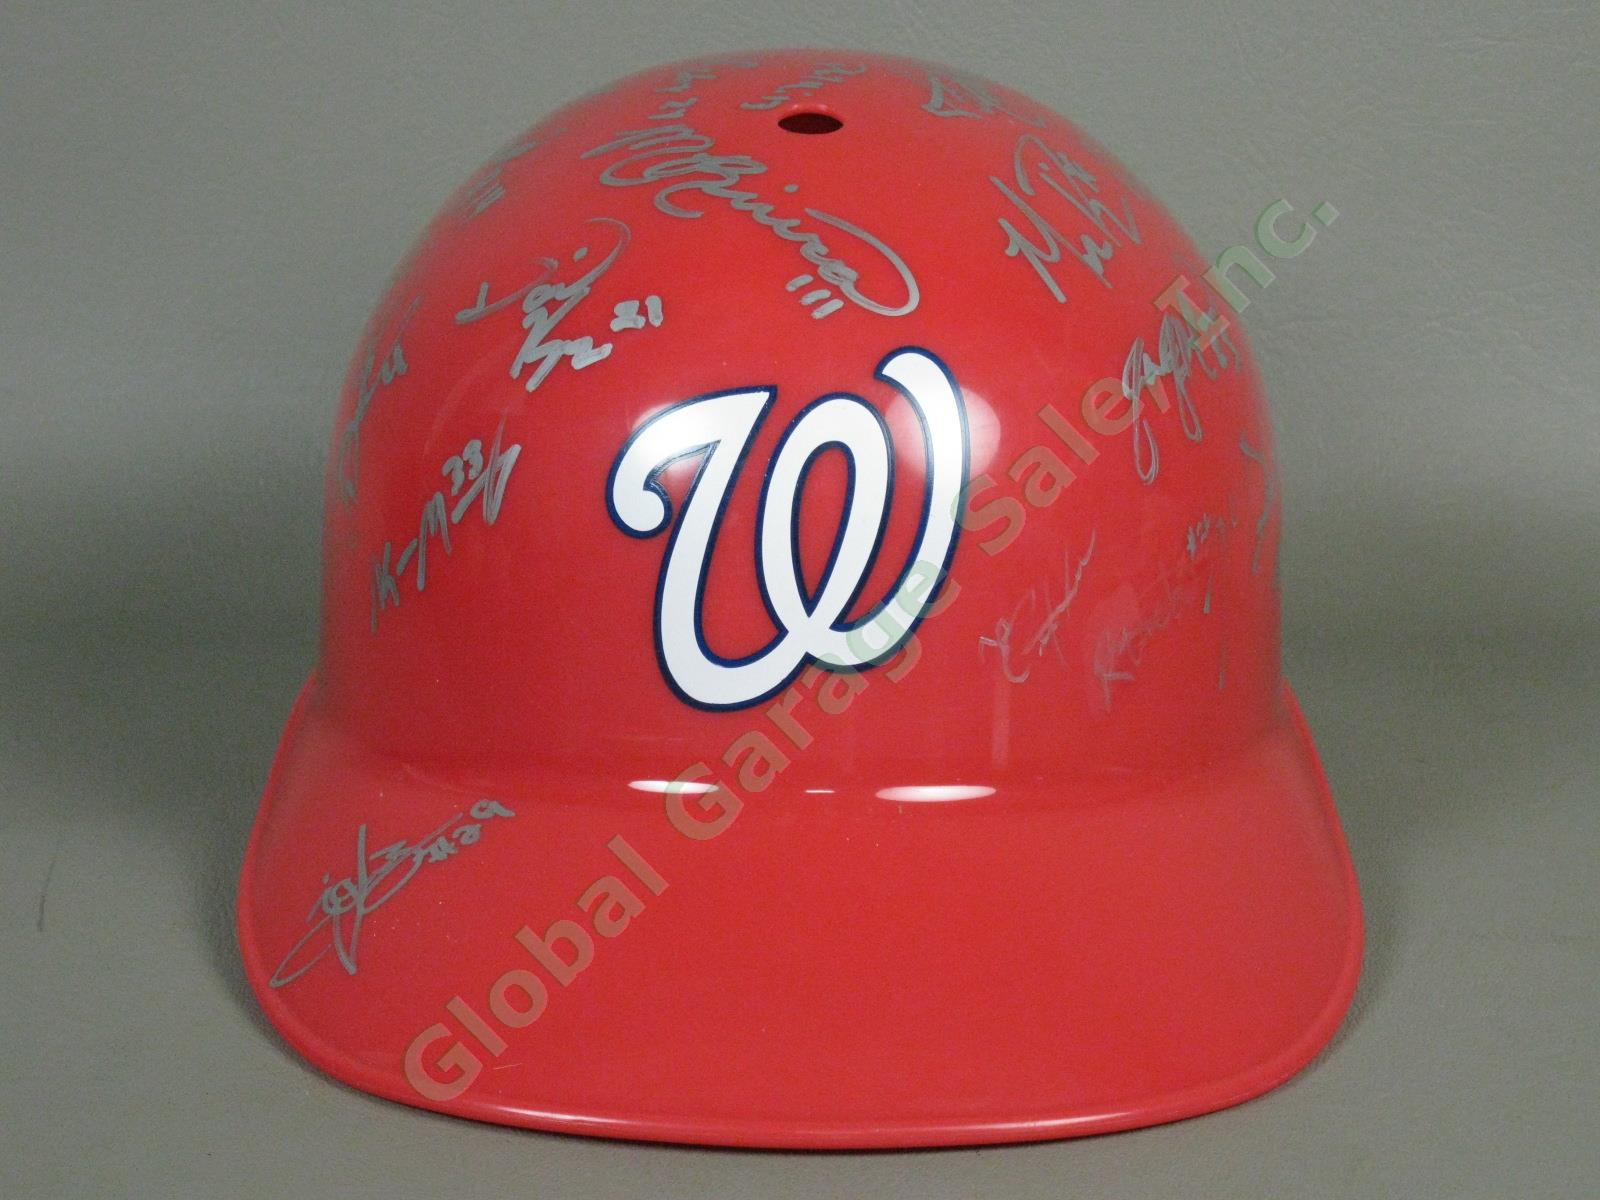 2015 Auburn Doubledays Team Signed Baseball Helmet NYPL Washington Nationals NR